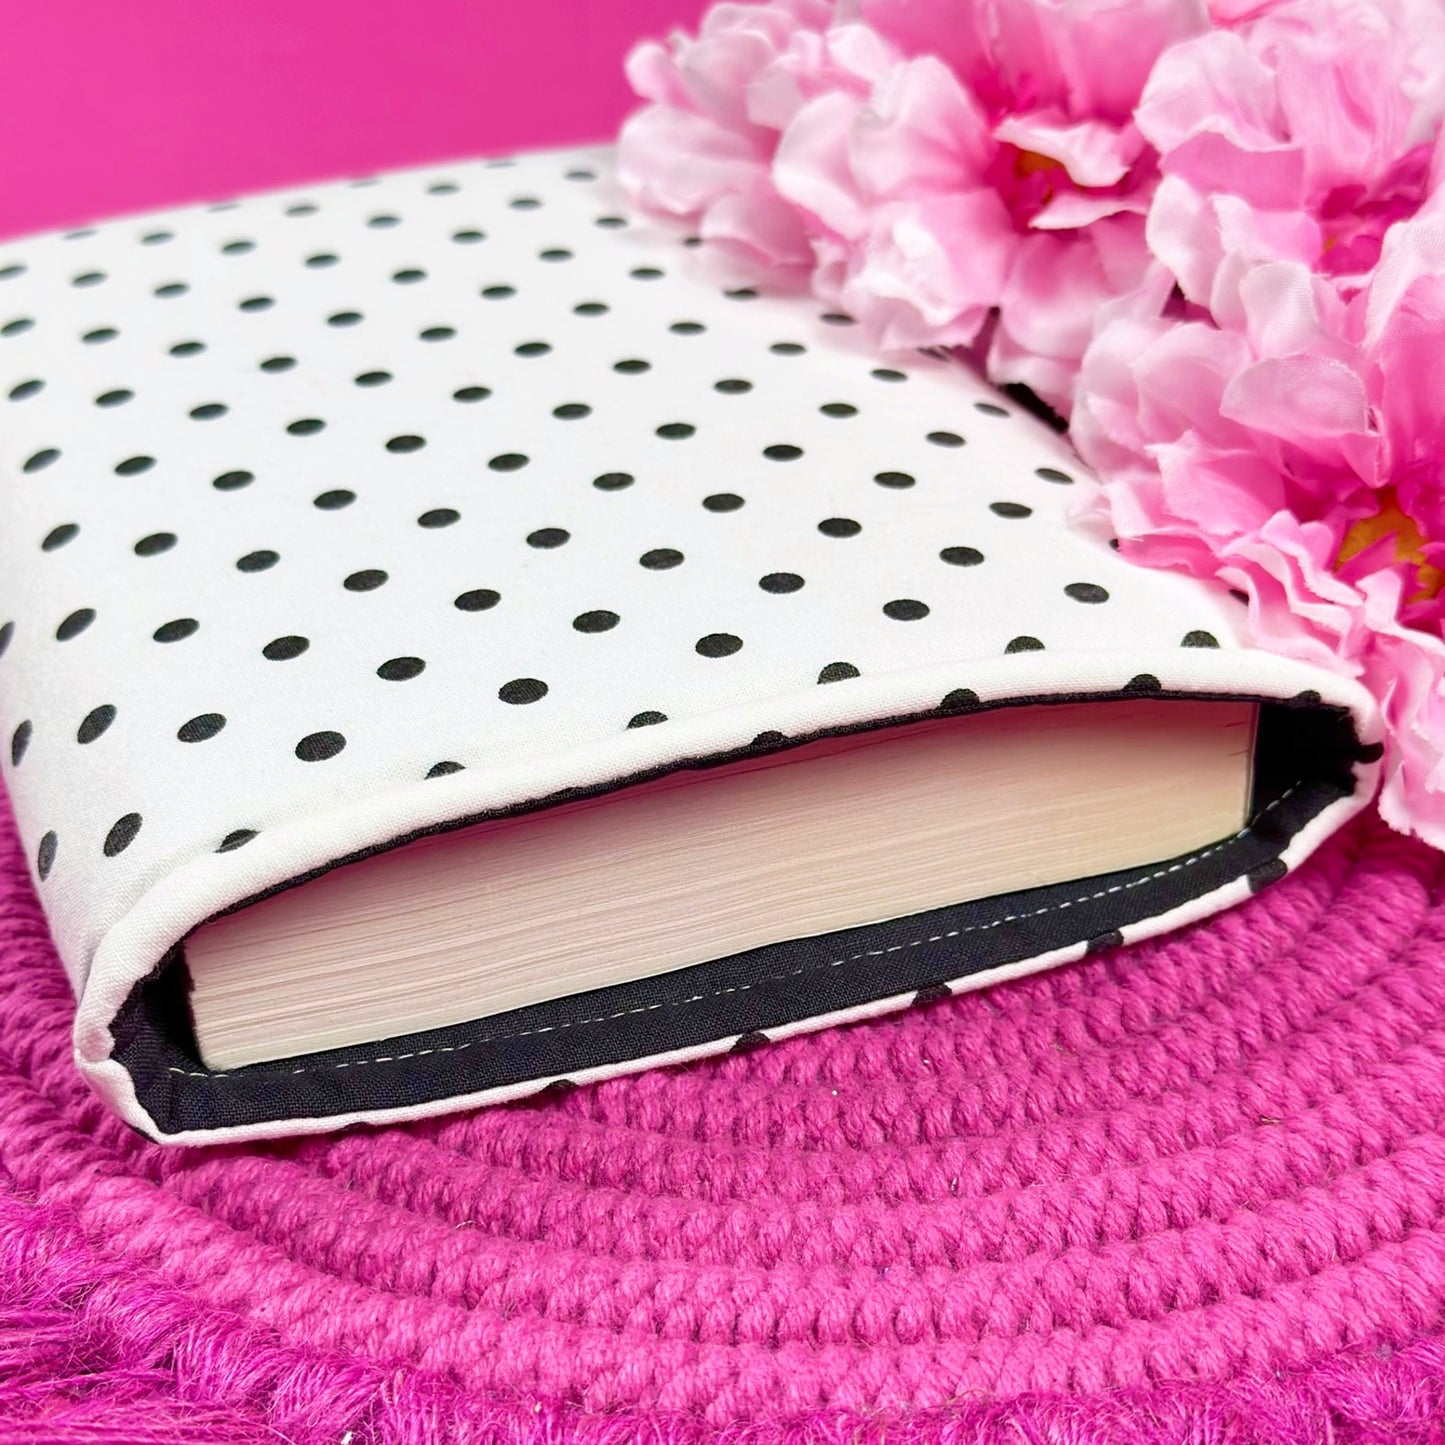 Polka Dot Book Sleeve with Pocket